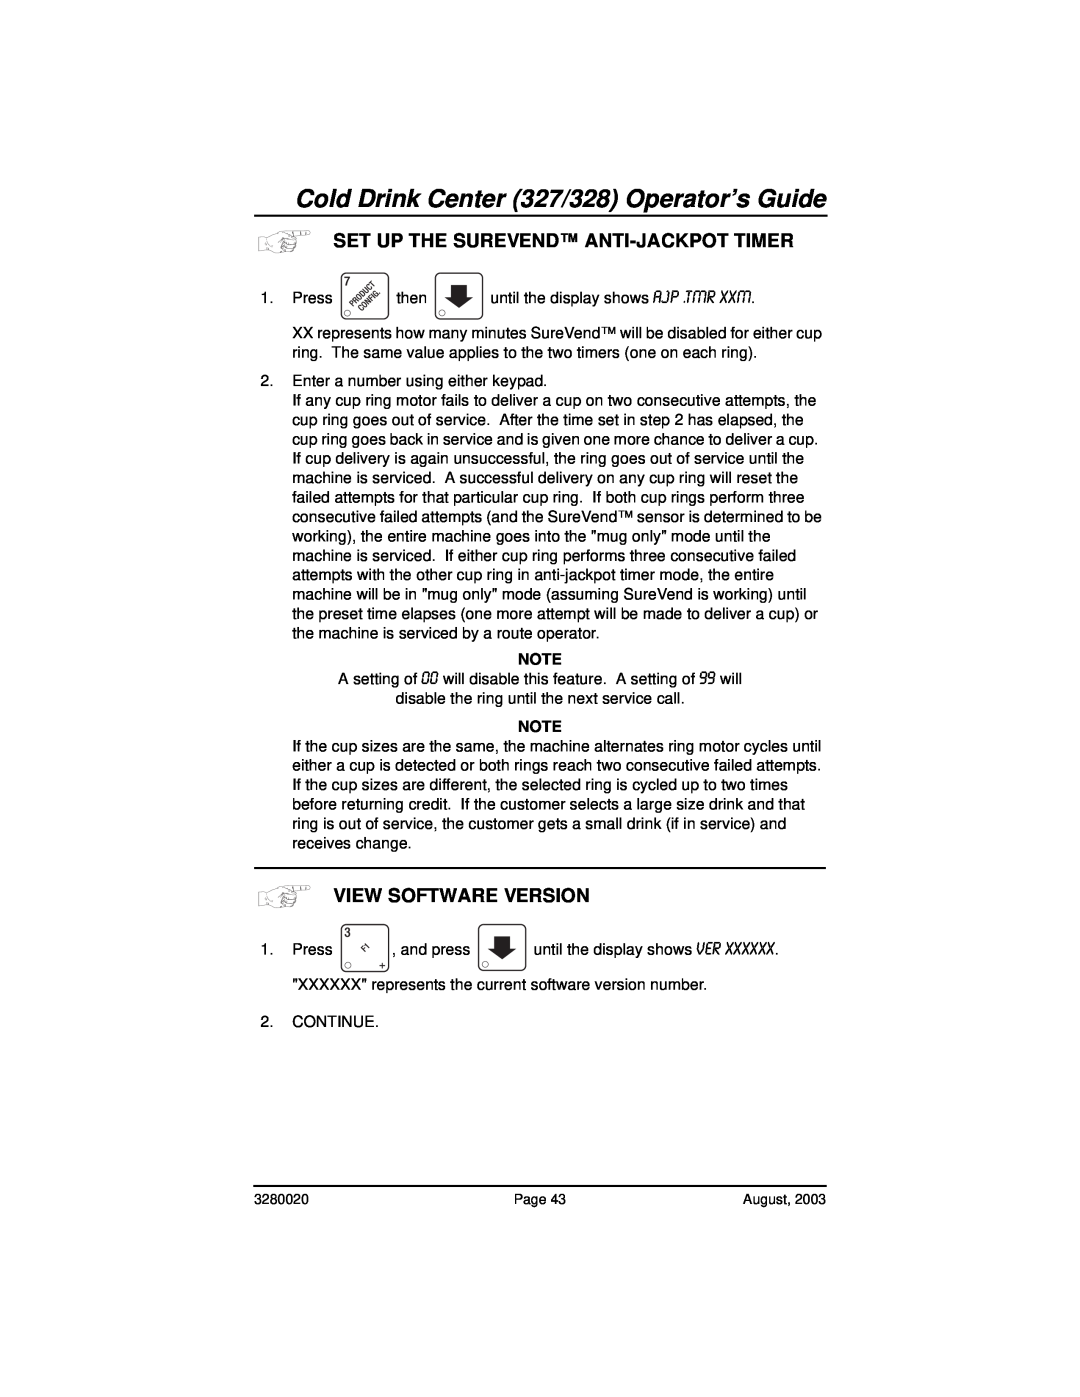 Everpure 325 manual Ajp.Tmrxxm, Cold Drink Center 327/328 Operator’s Guide, Set Up The Surevend Anti-Jackpottimer 